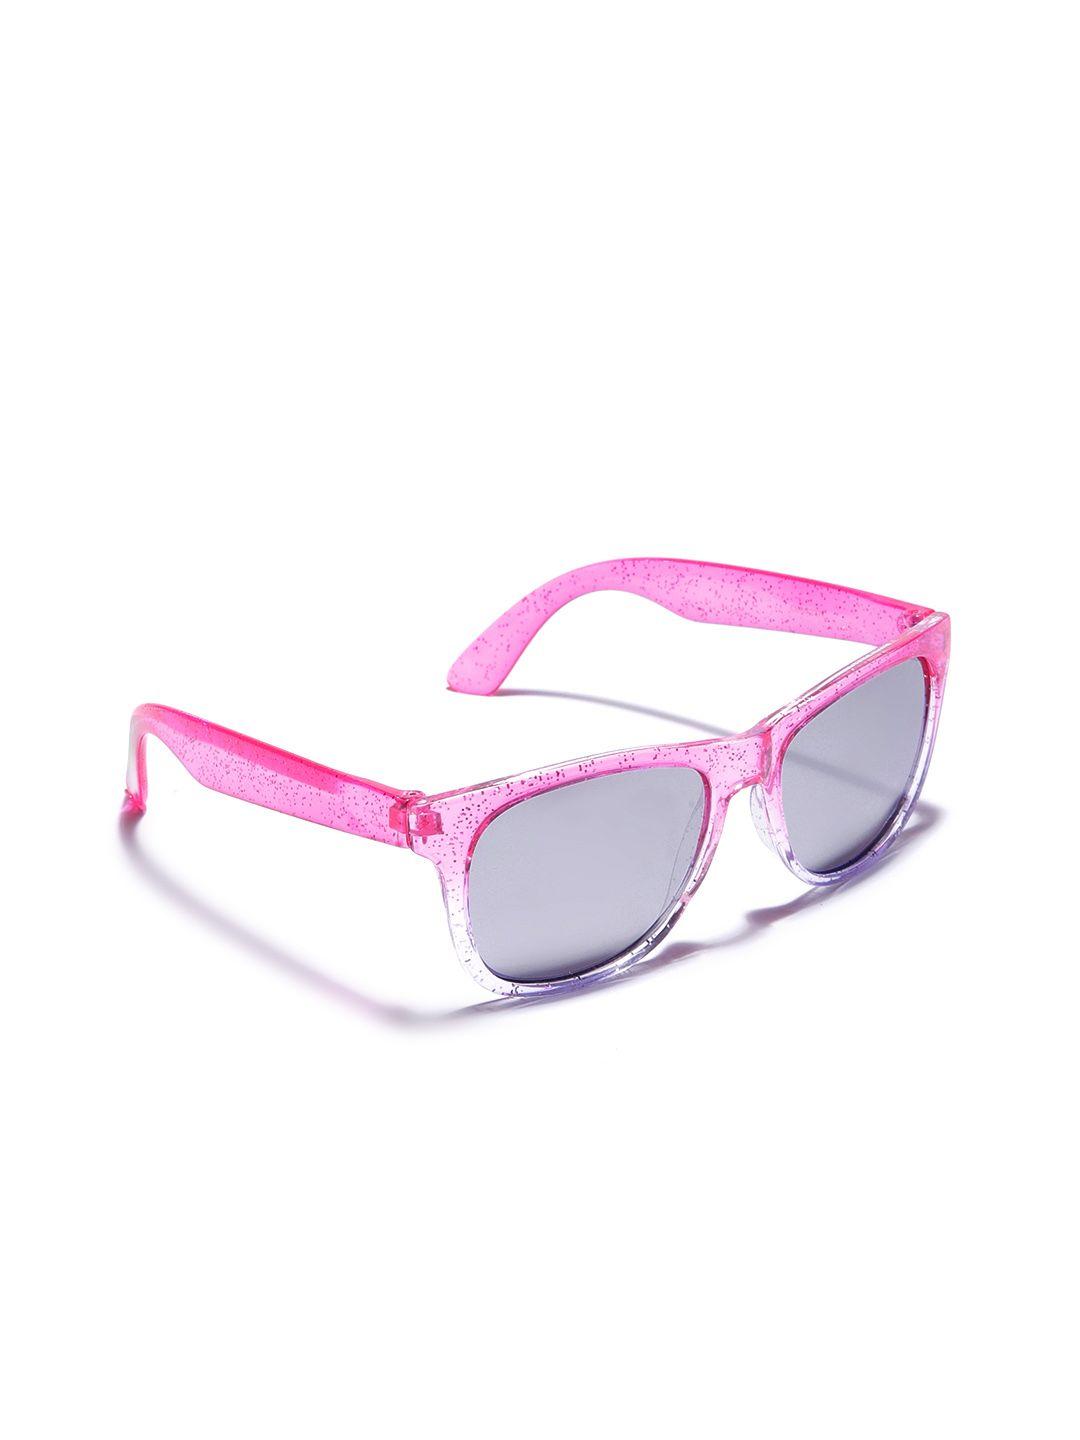 carlton london girls mirrored lens & pink uv protected lens wayfarer sunglasses  clsg237